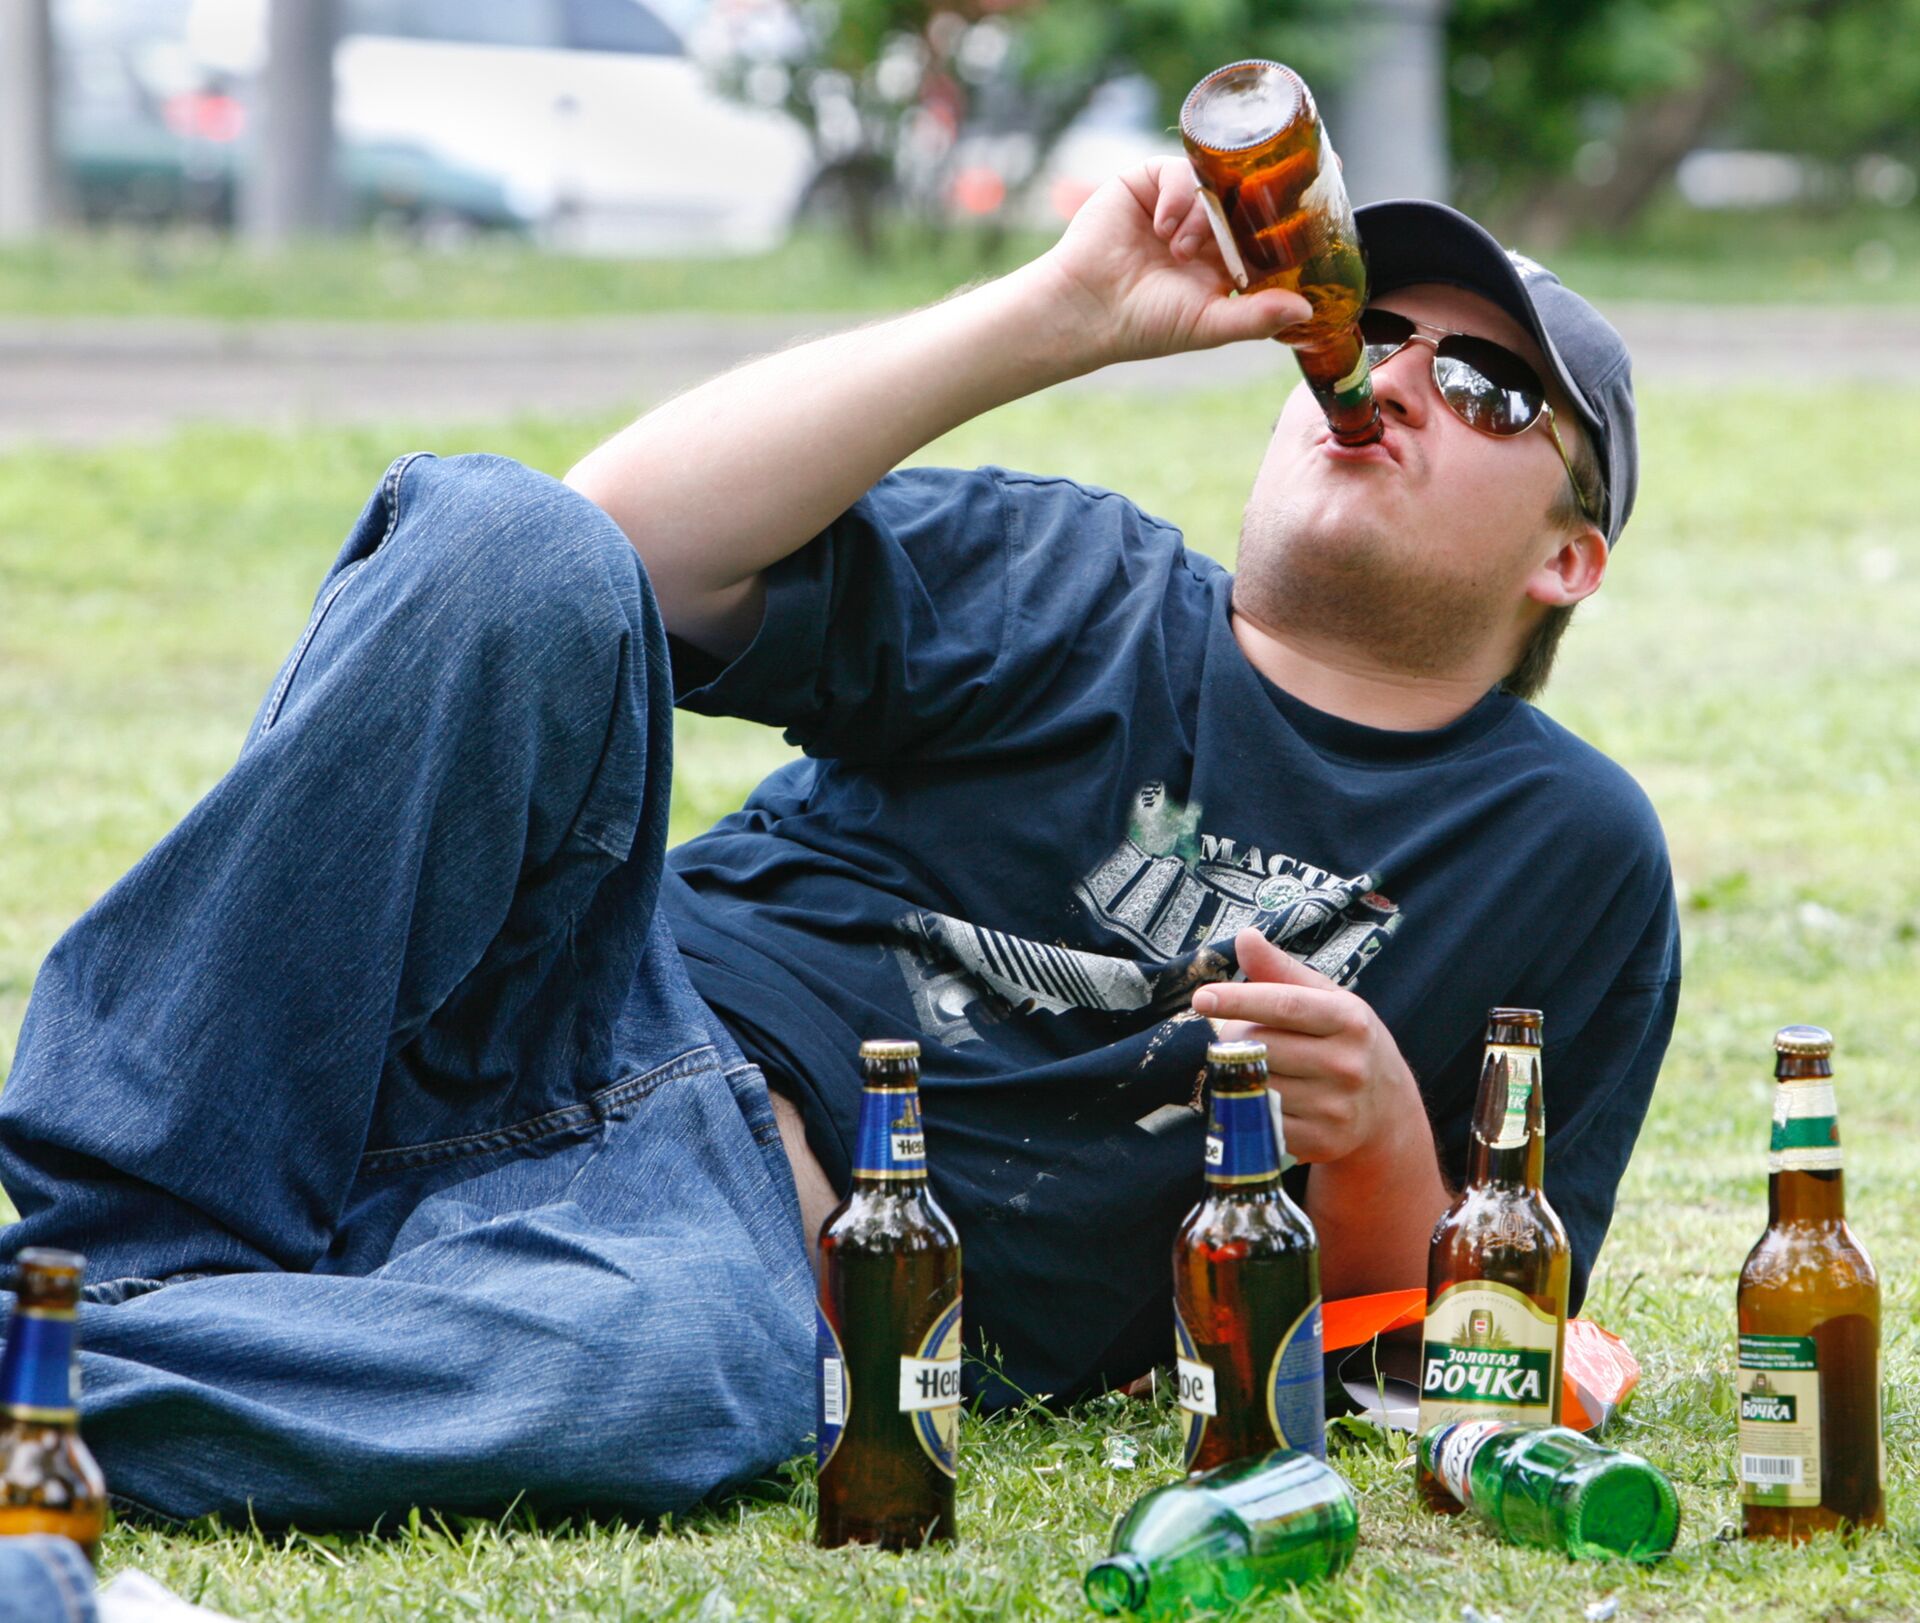 Картинка пьющий человек. Алкаш с пивом. Человек с пивом. Пьющий алкоголь человек. Человек пьет пиво.